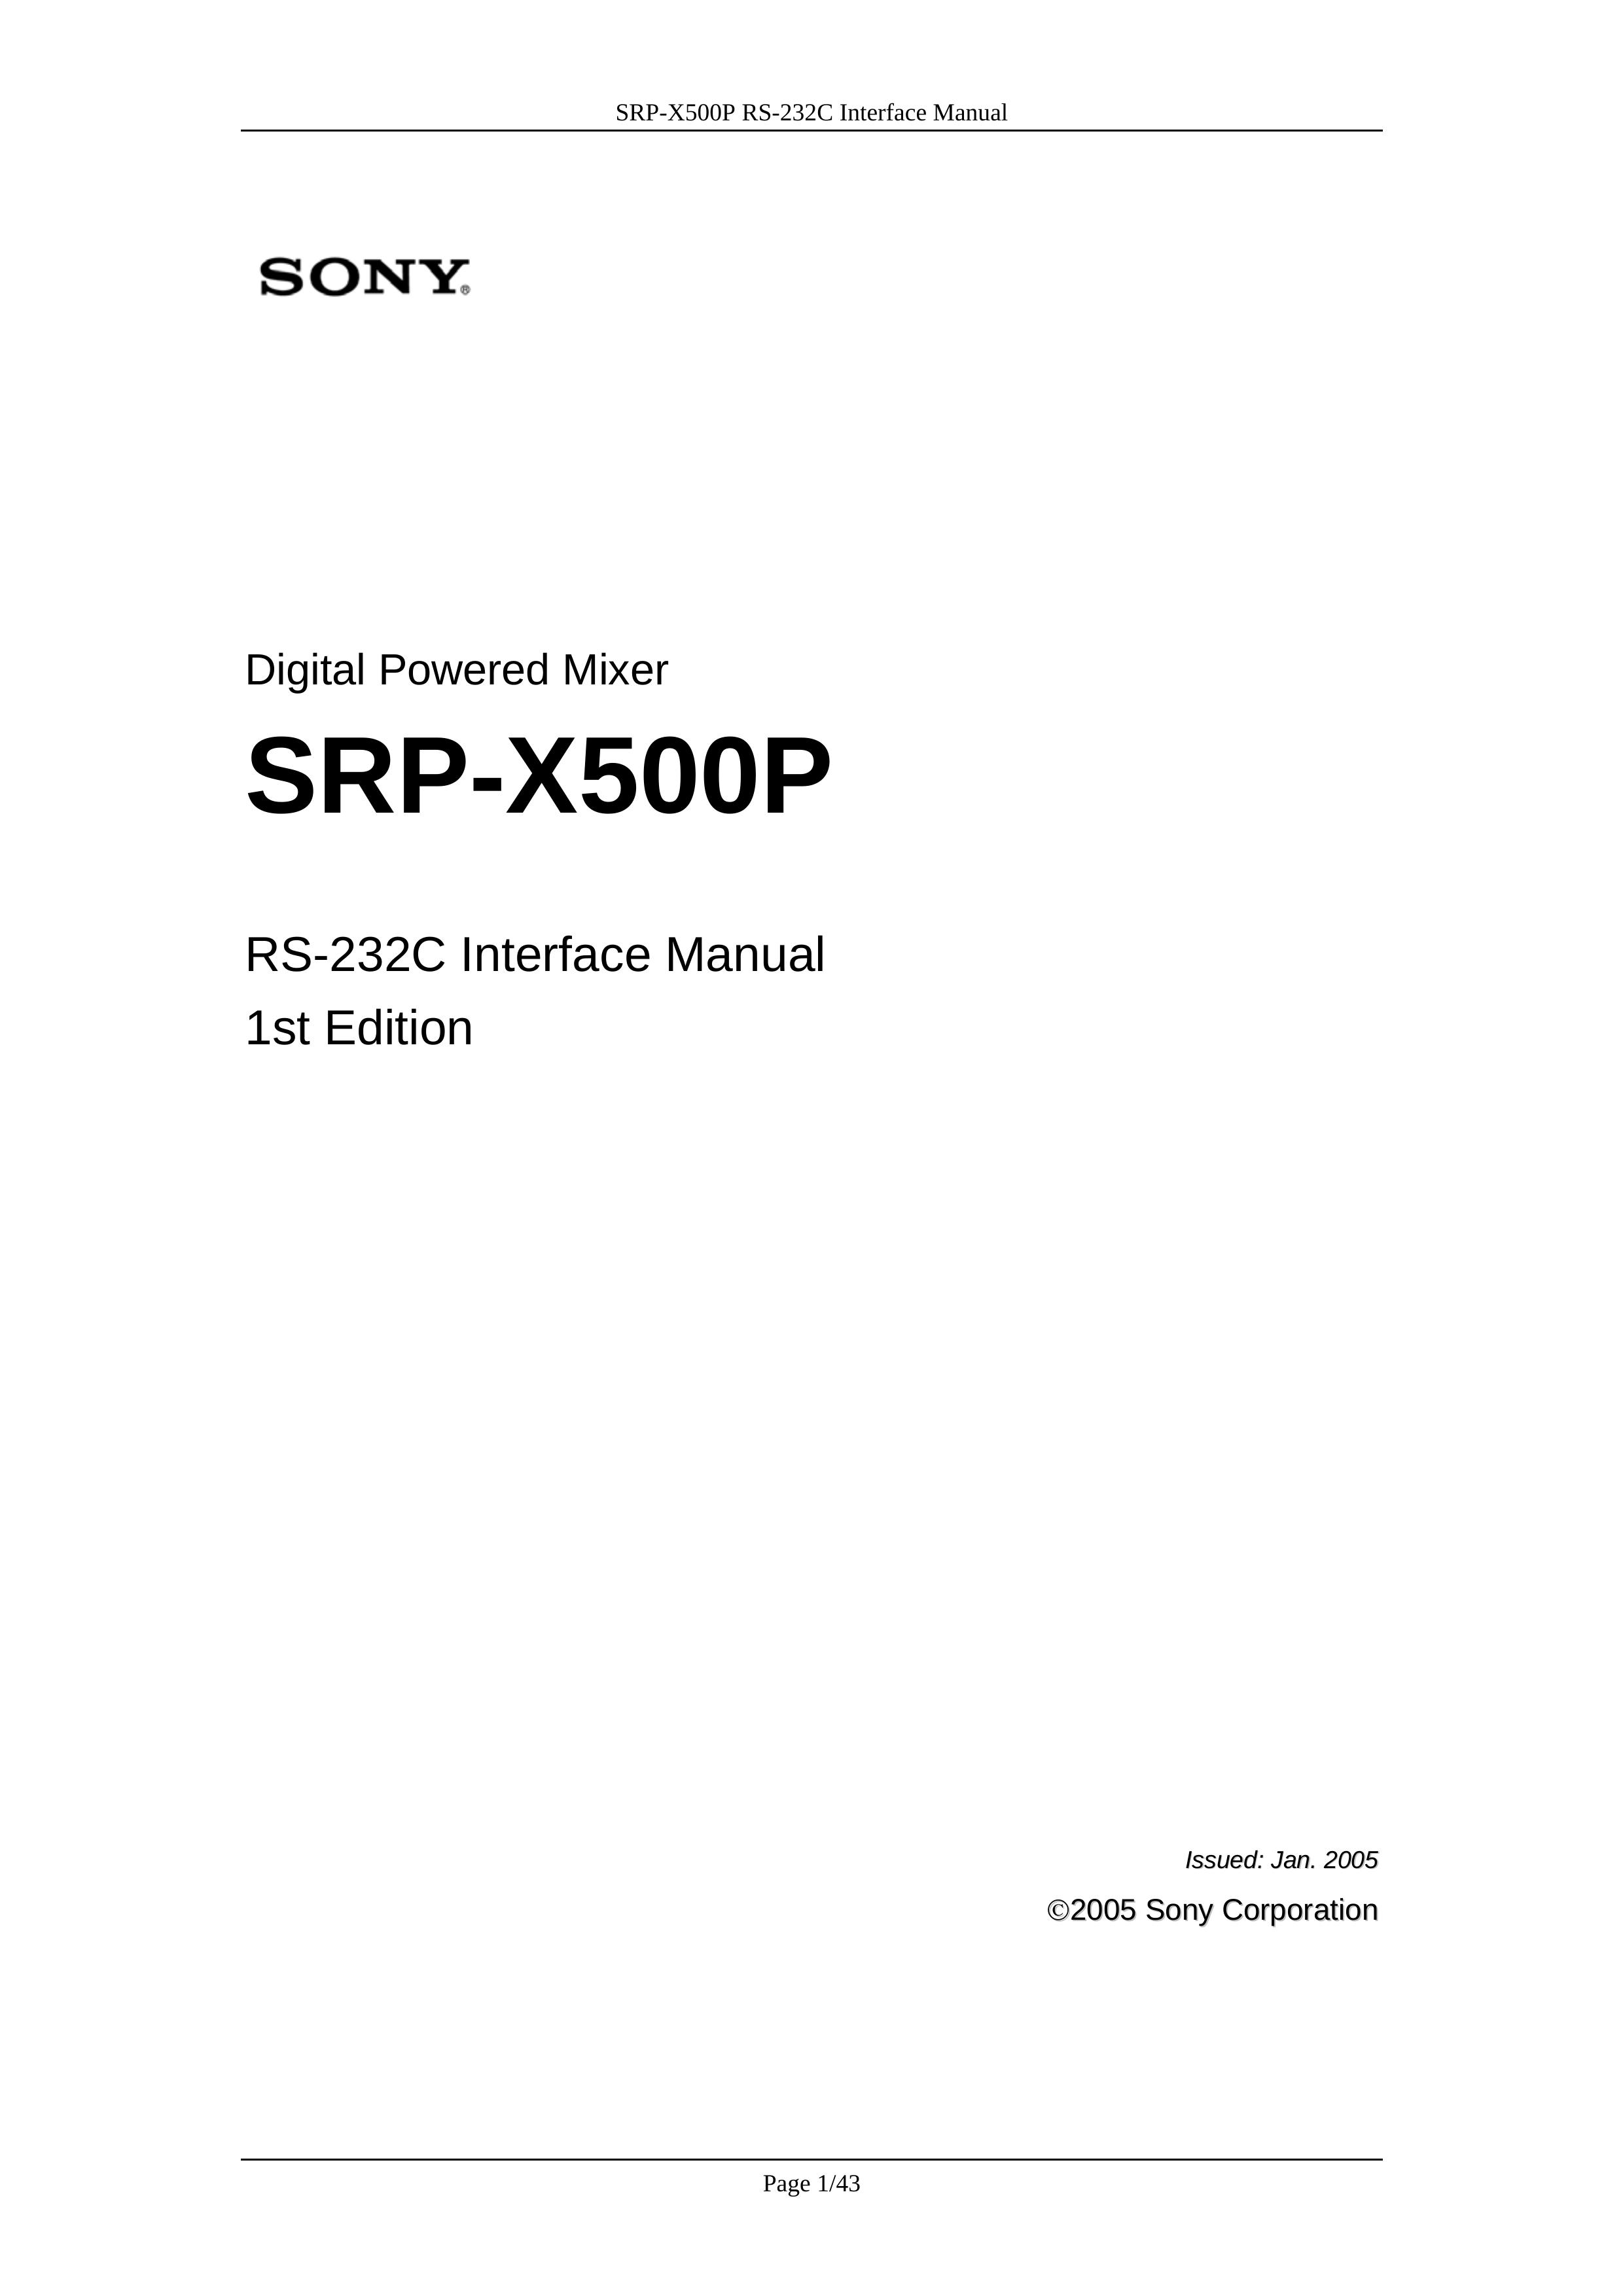 Sony SRP-X500P Music Mixer User Manual